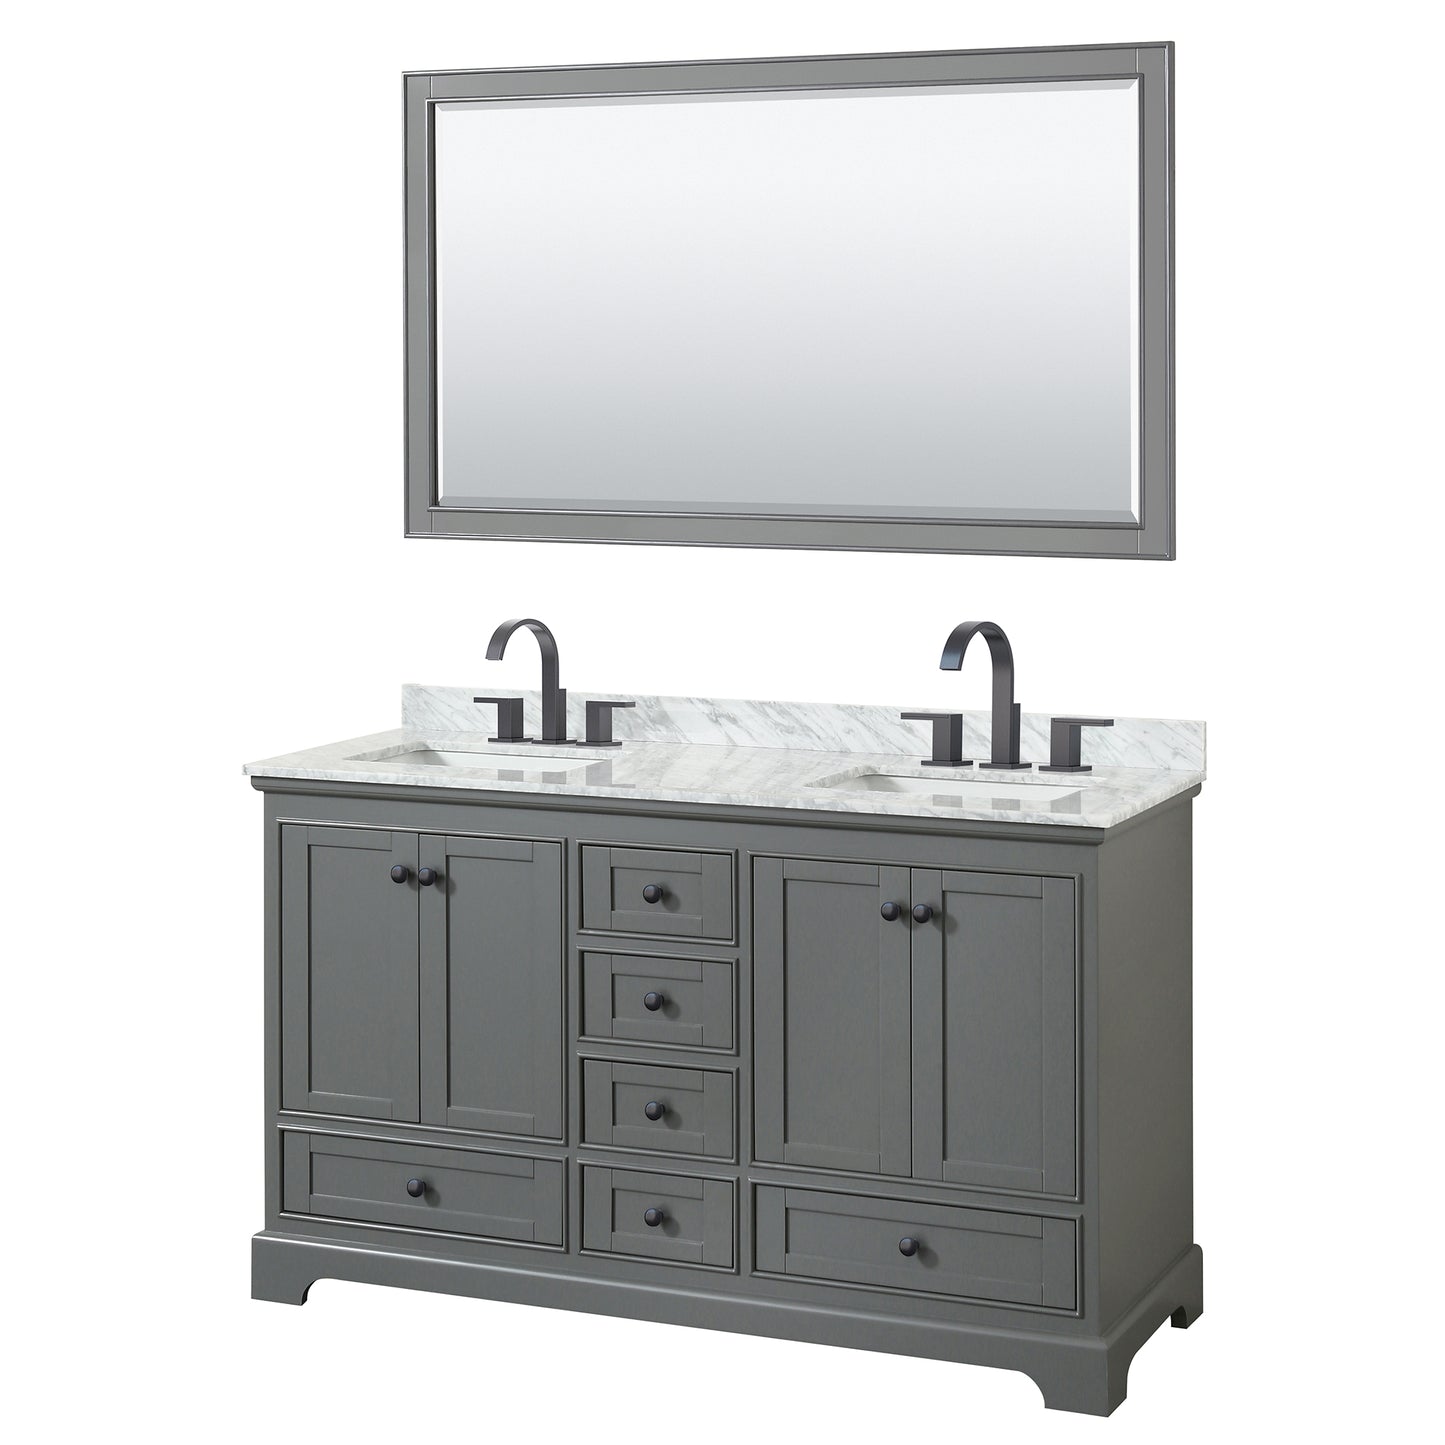 Wyndham Deborah 60 Inch Double Bathroom Vanity Undermount Square Sinks in Matte Black Trim with 58 Inch Mirror - Luxe Bathroom Vanities